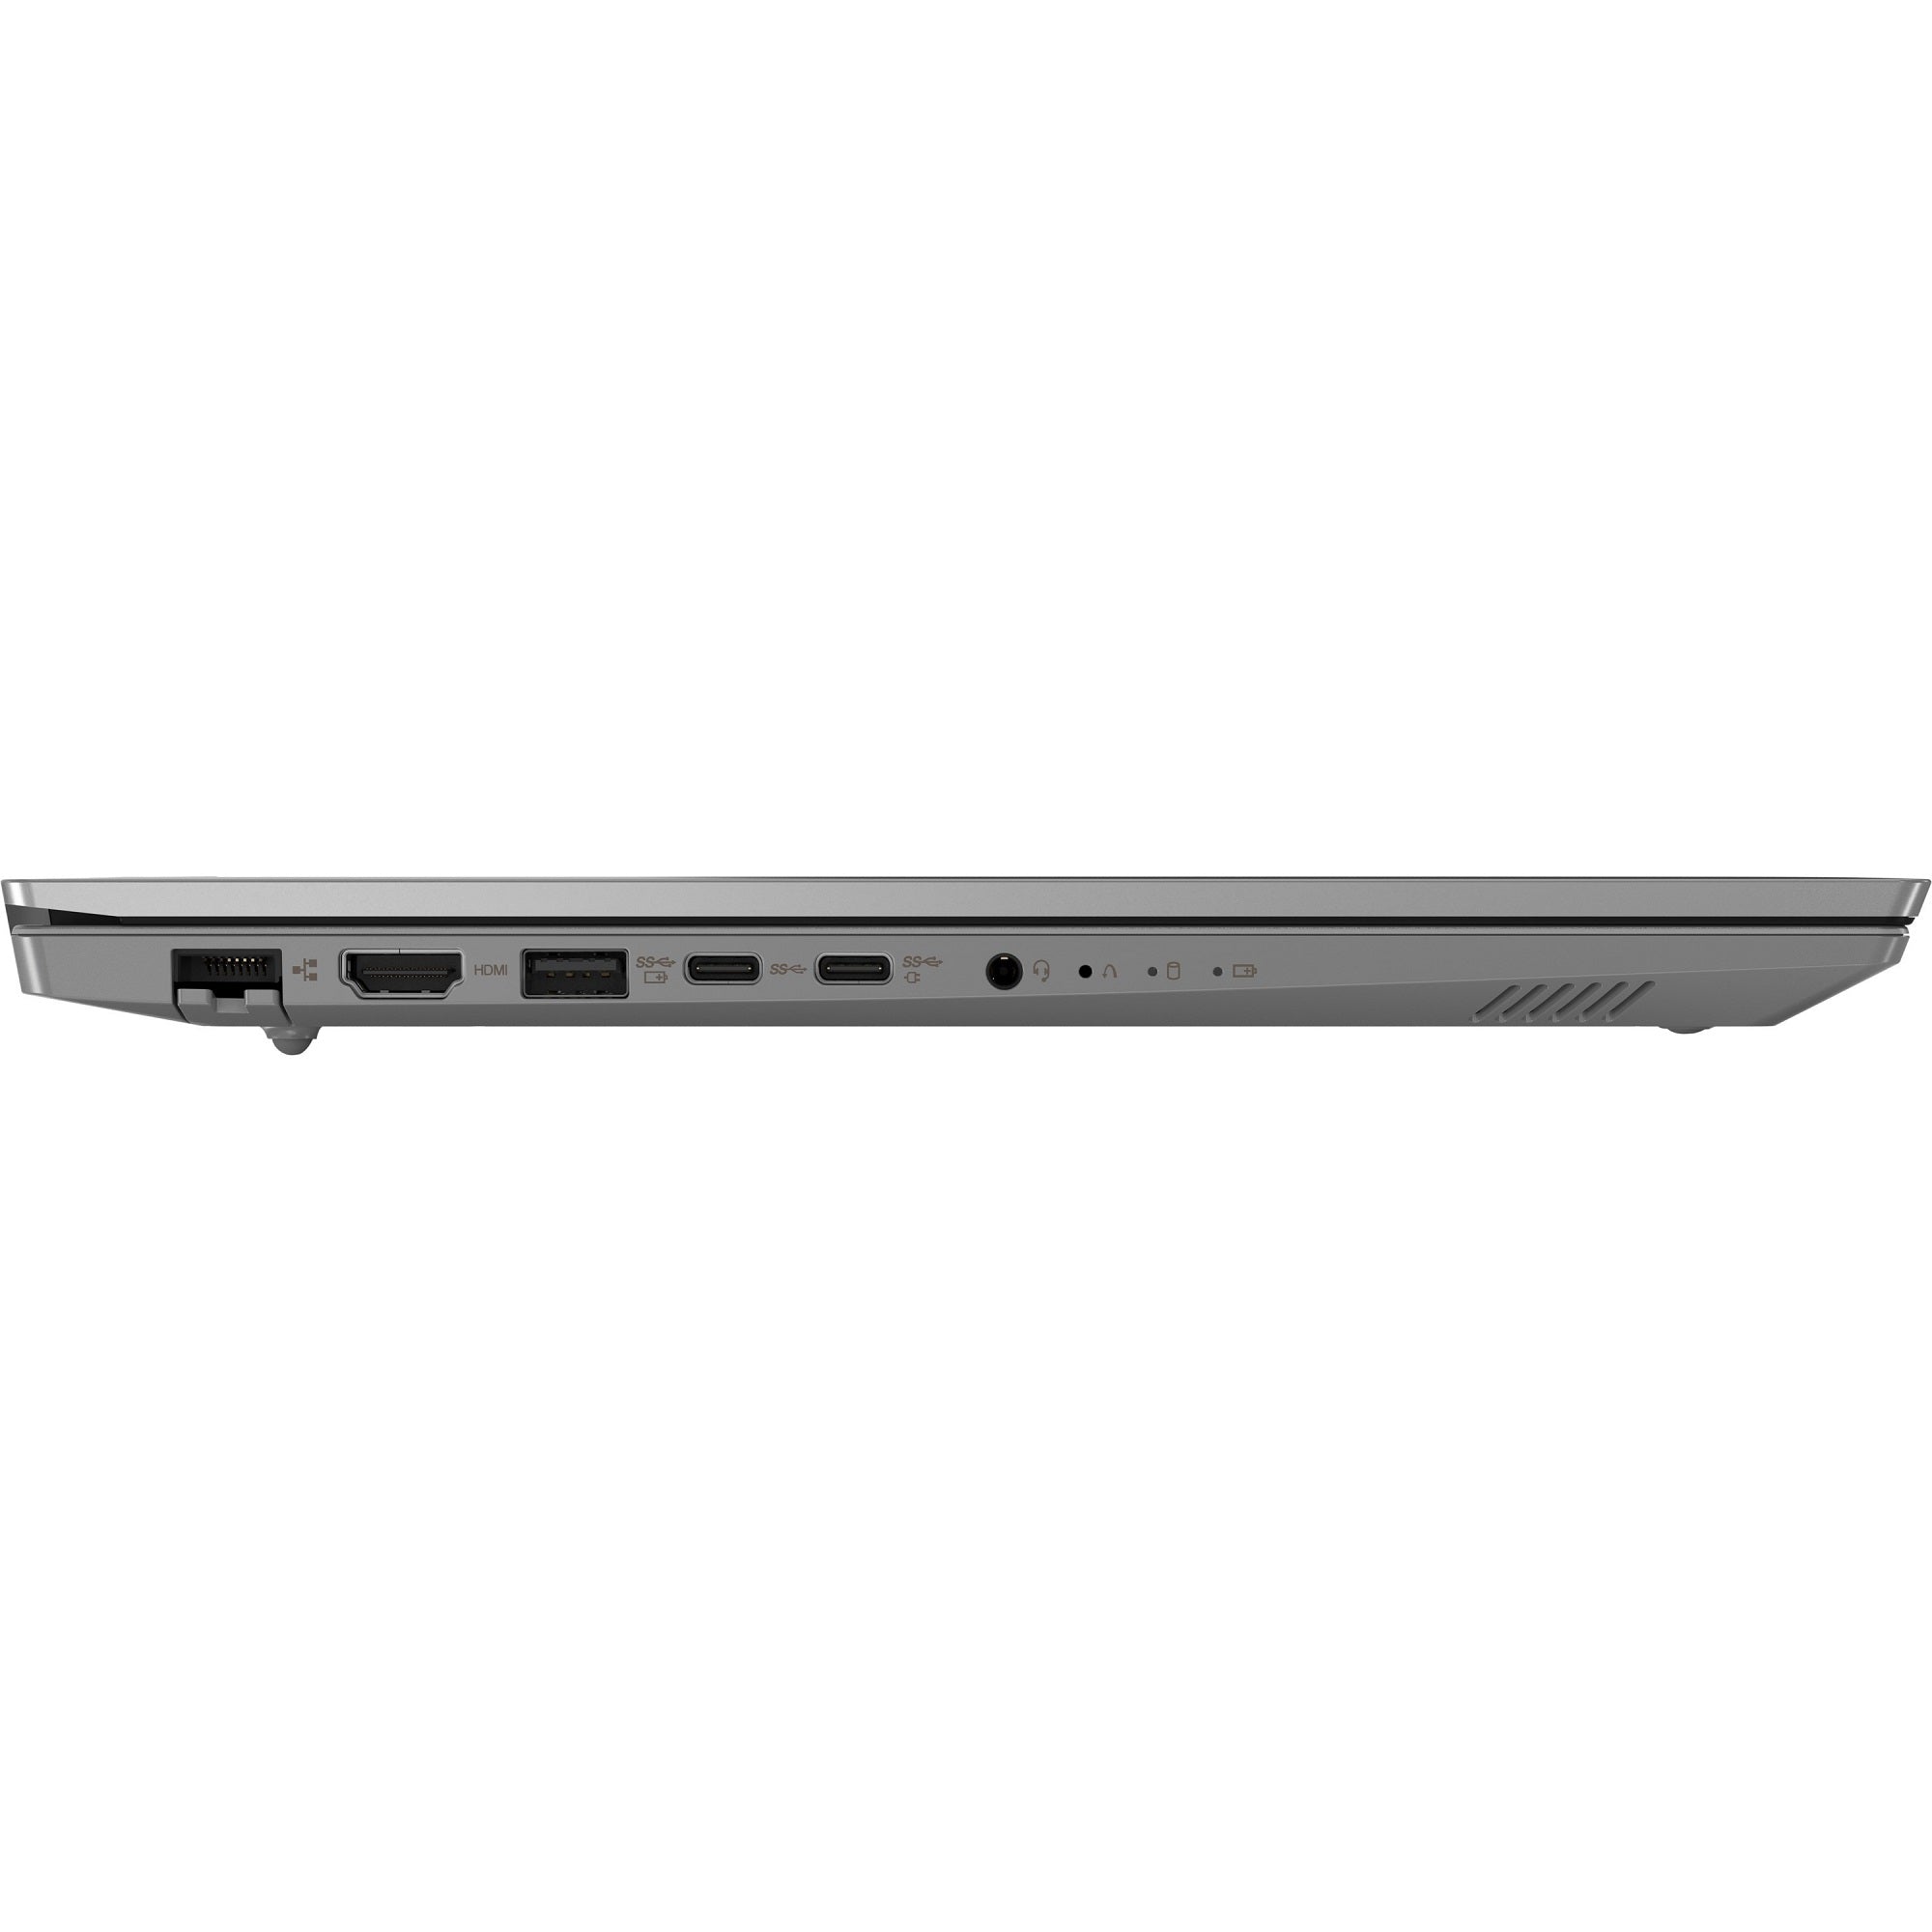 Lenovo 15" ThinkBook 15 IIL Laptop -  Intel Core i5 - 8GB Memory - 256GB SSD